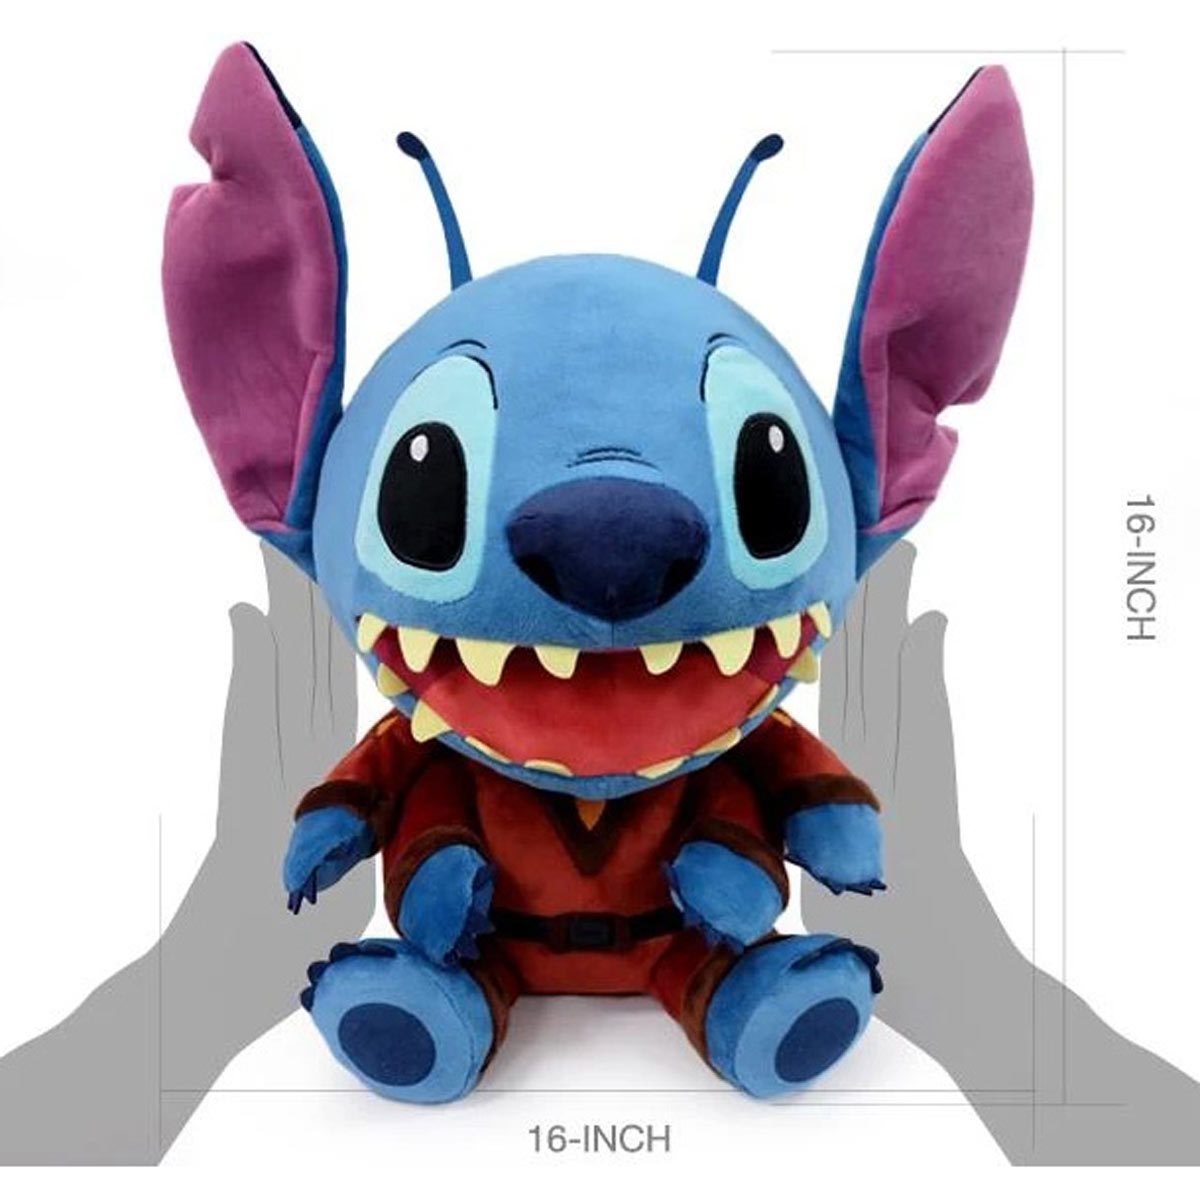 Buy Stitch (Hugging) Plush at Funko.